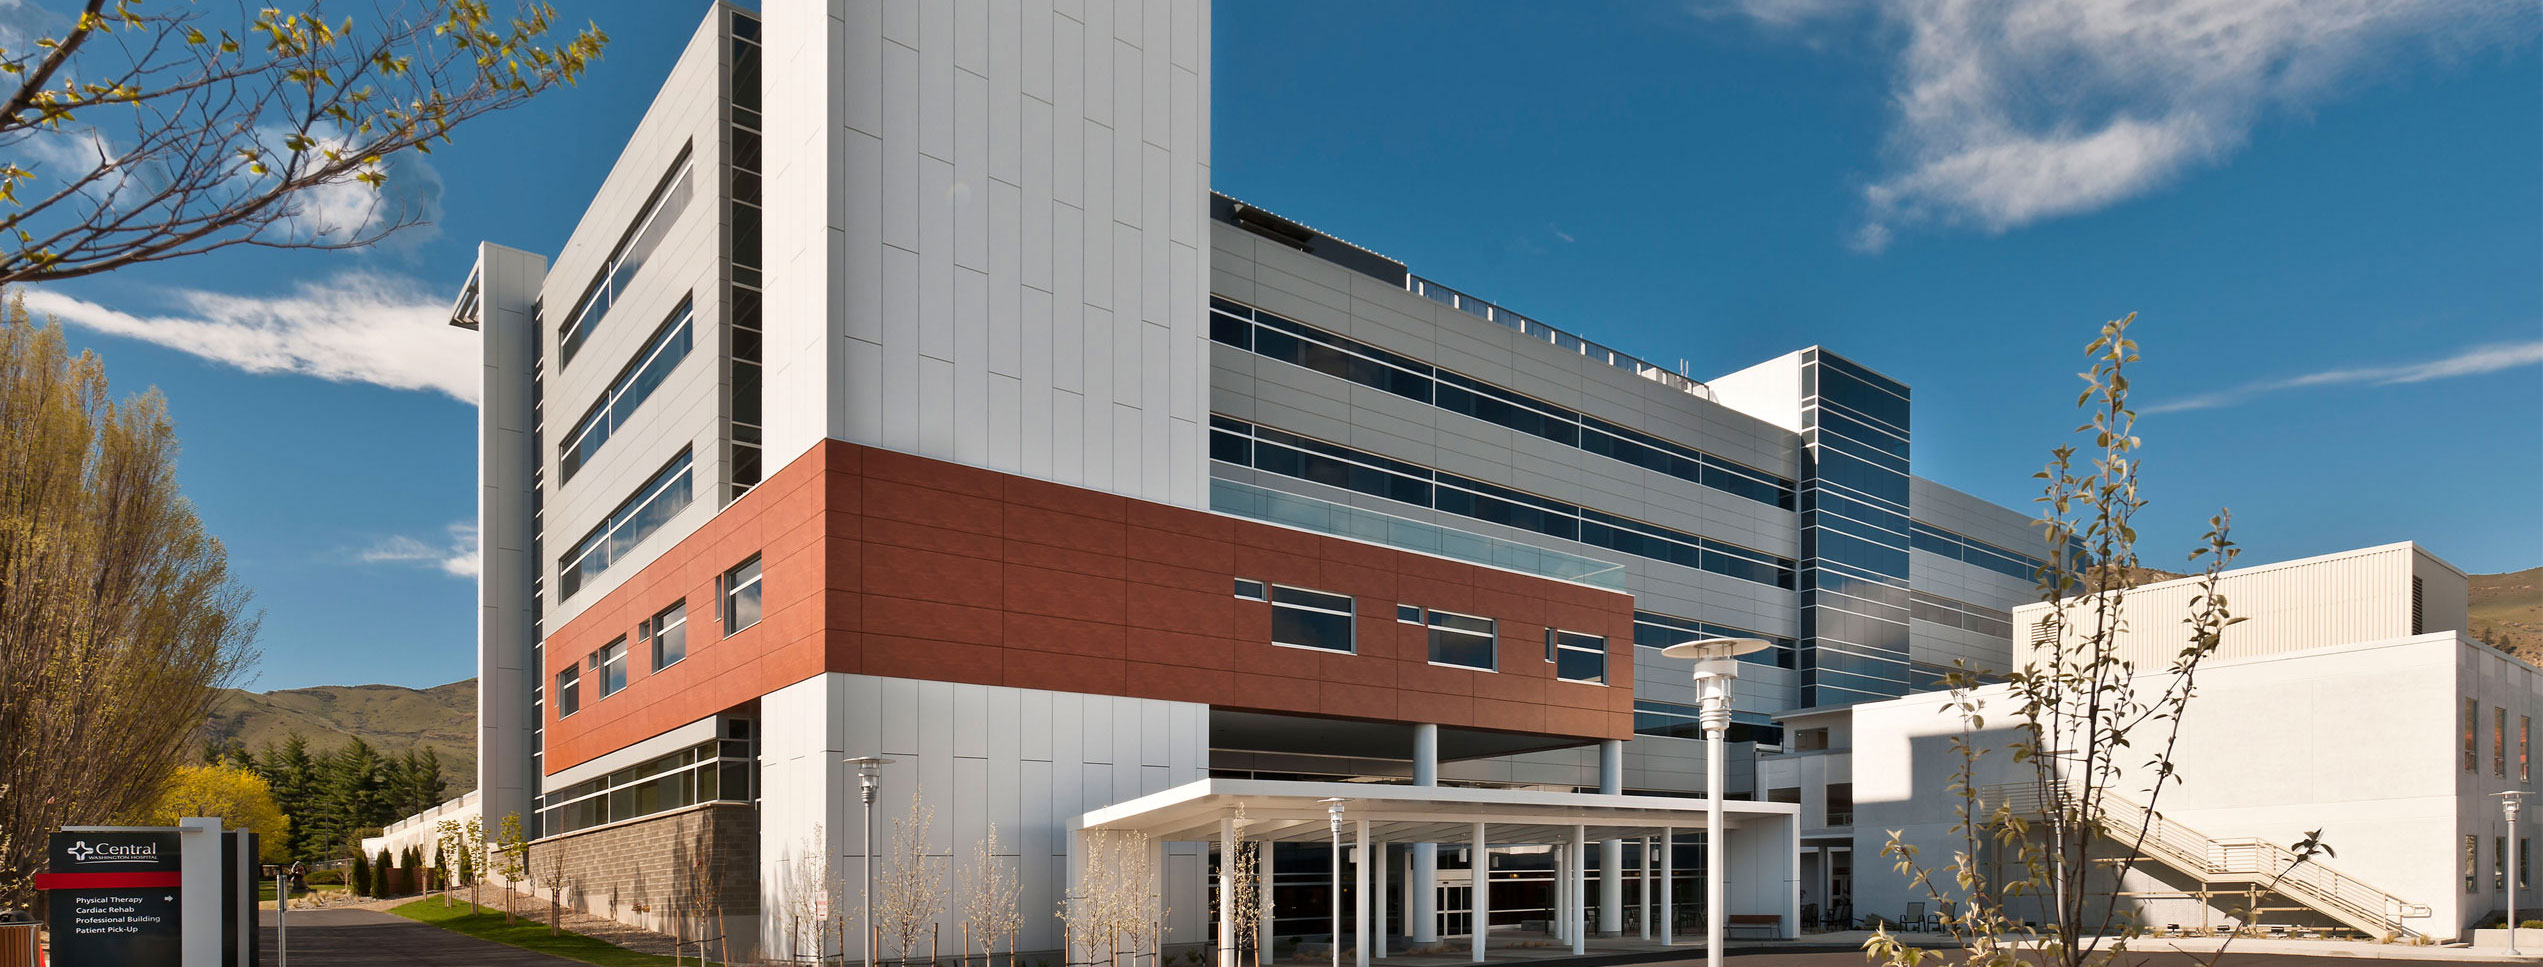 Central Washington Hospital Expansion